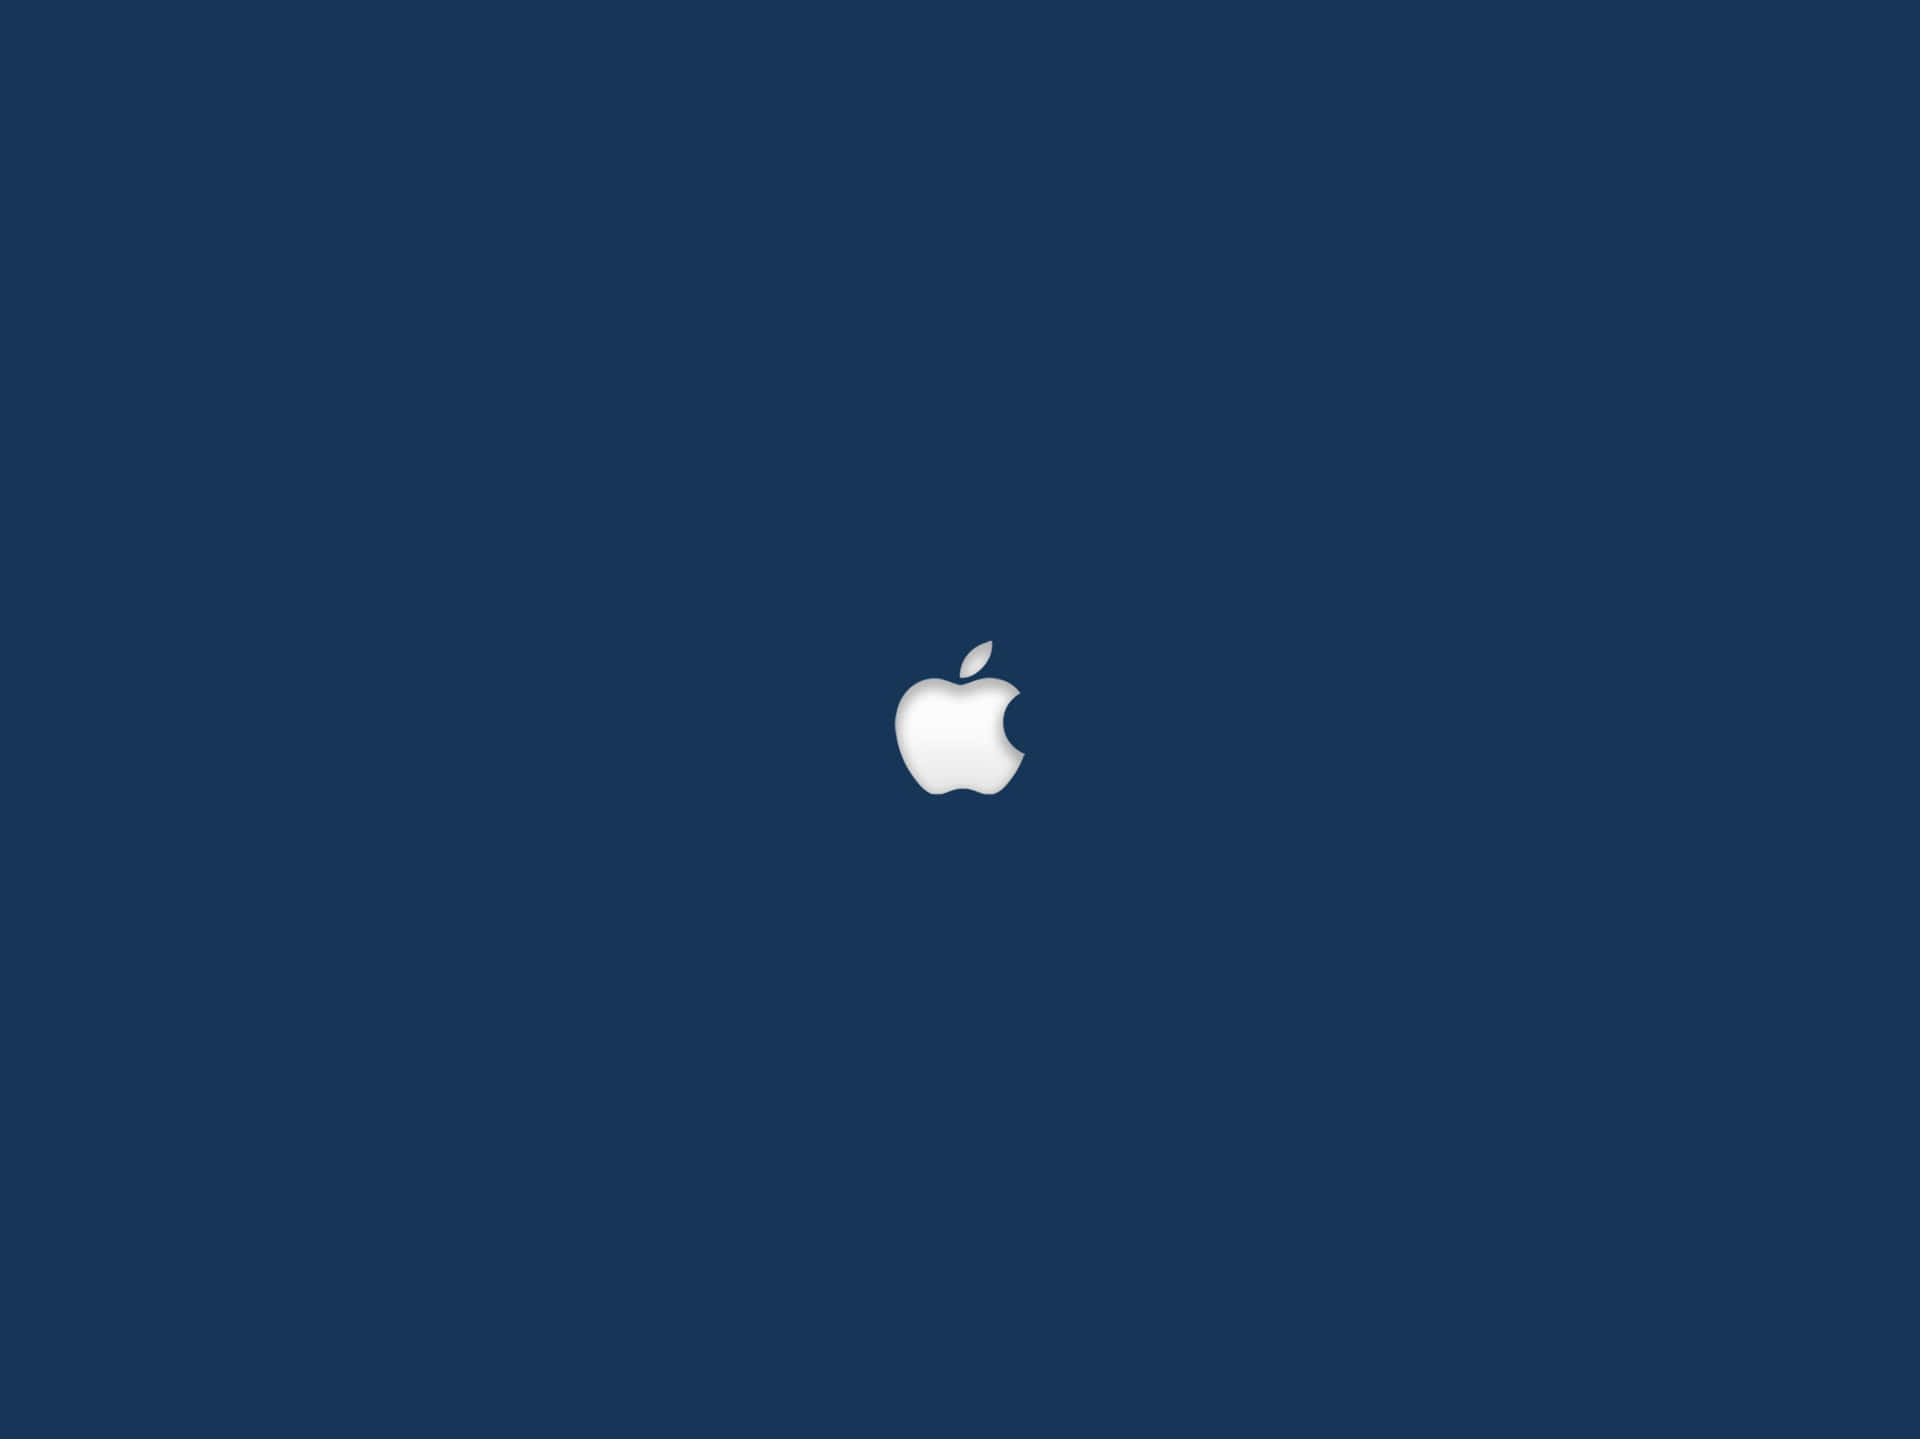 Blue Apple Logo Ipad Wallpaper